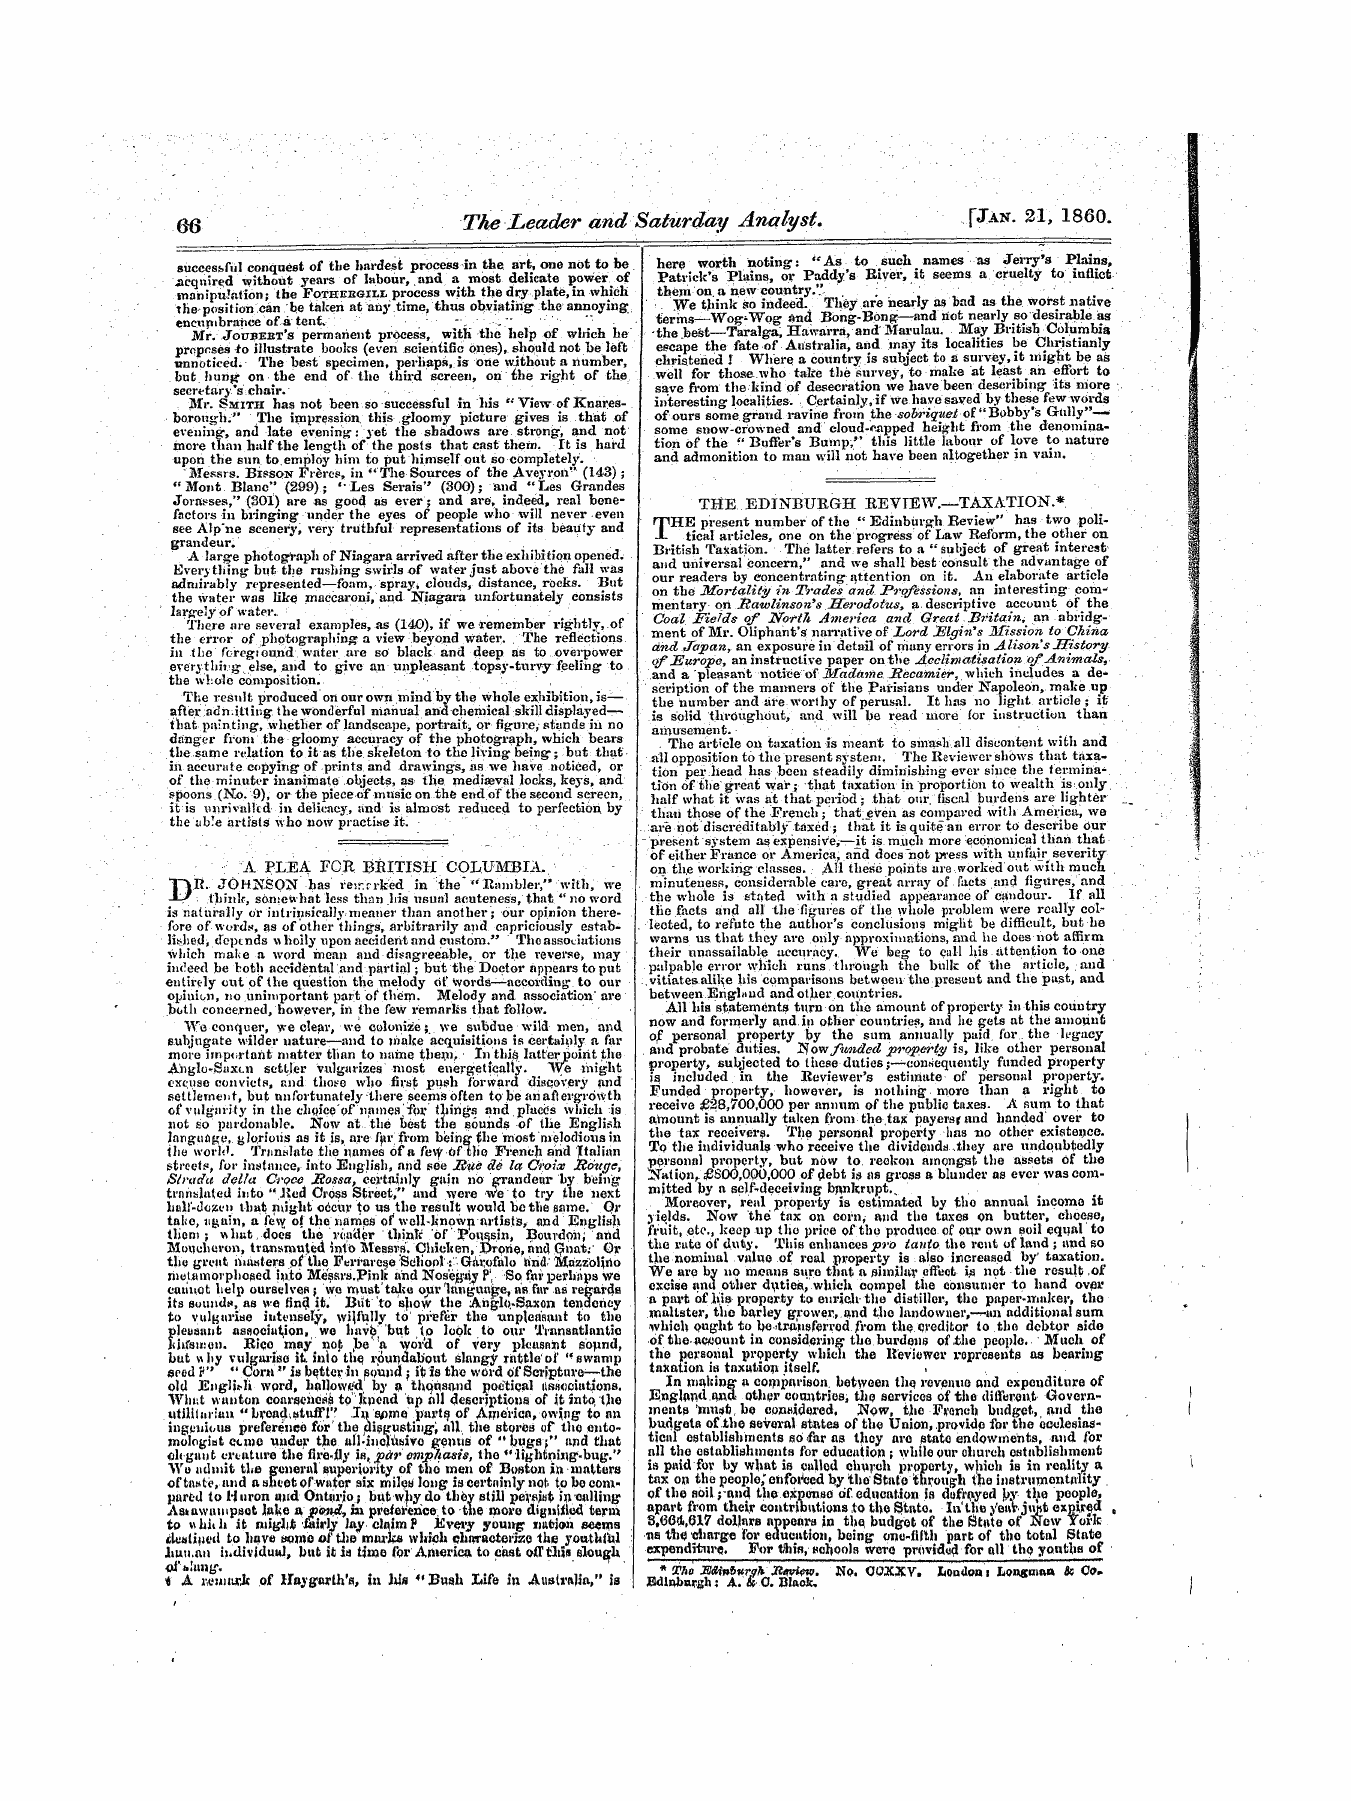 Leader (1850-1860): jS F Y, 1st edition - ; A Plea Ror Beitish Colu]\Ibia.